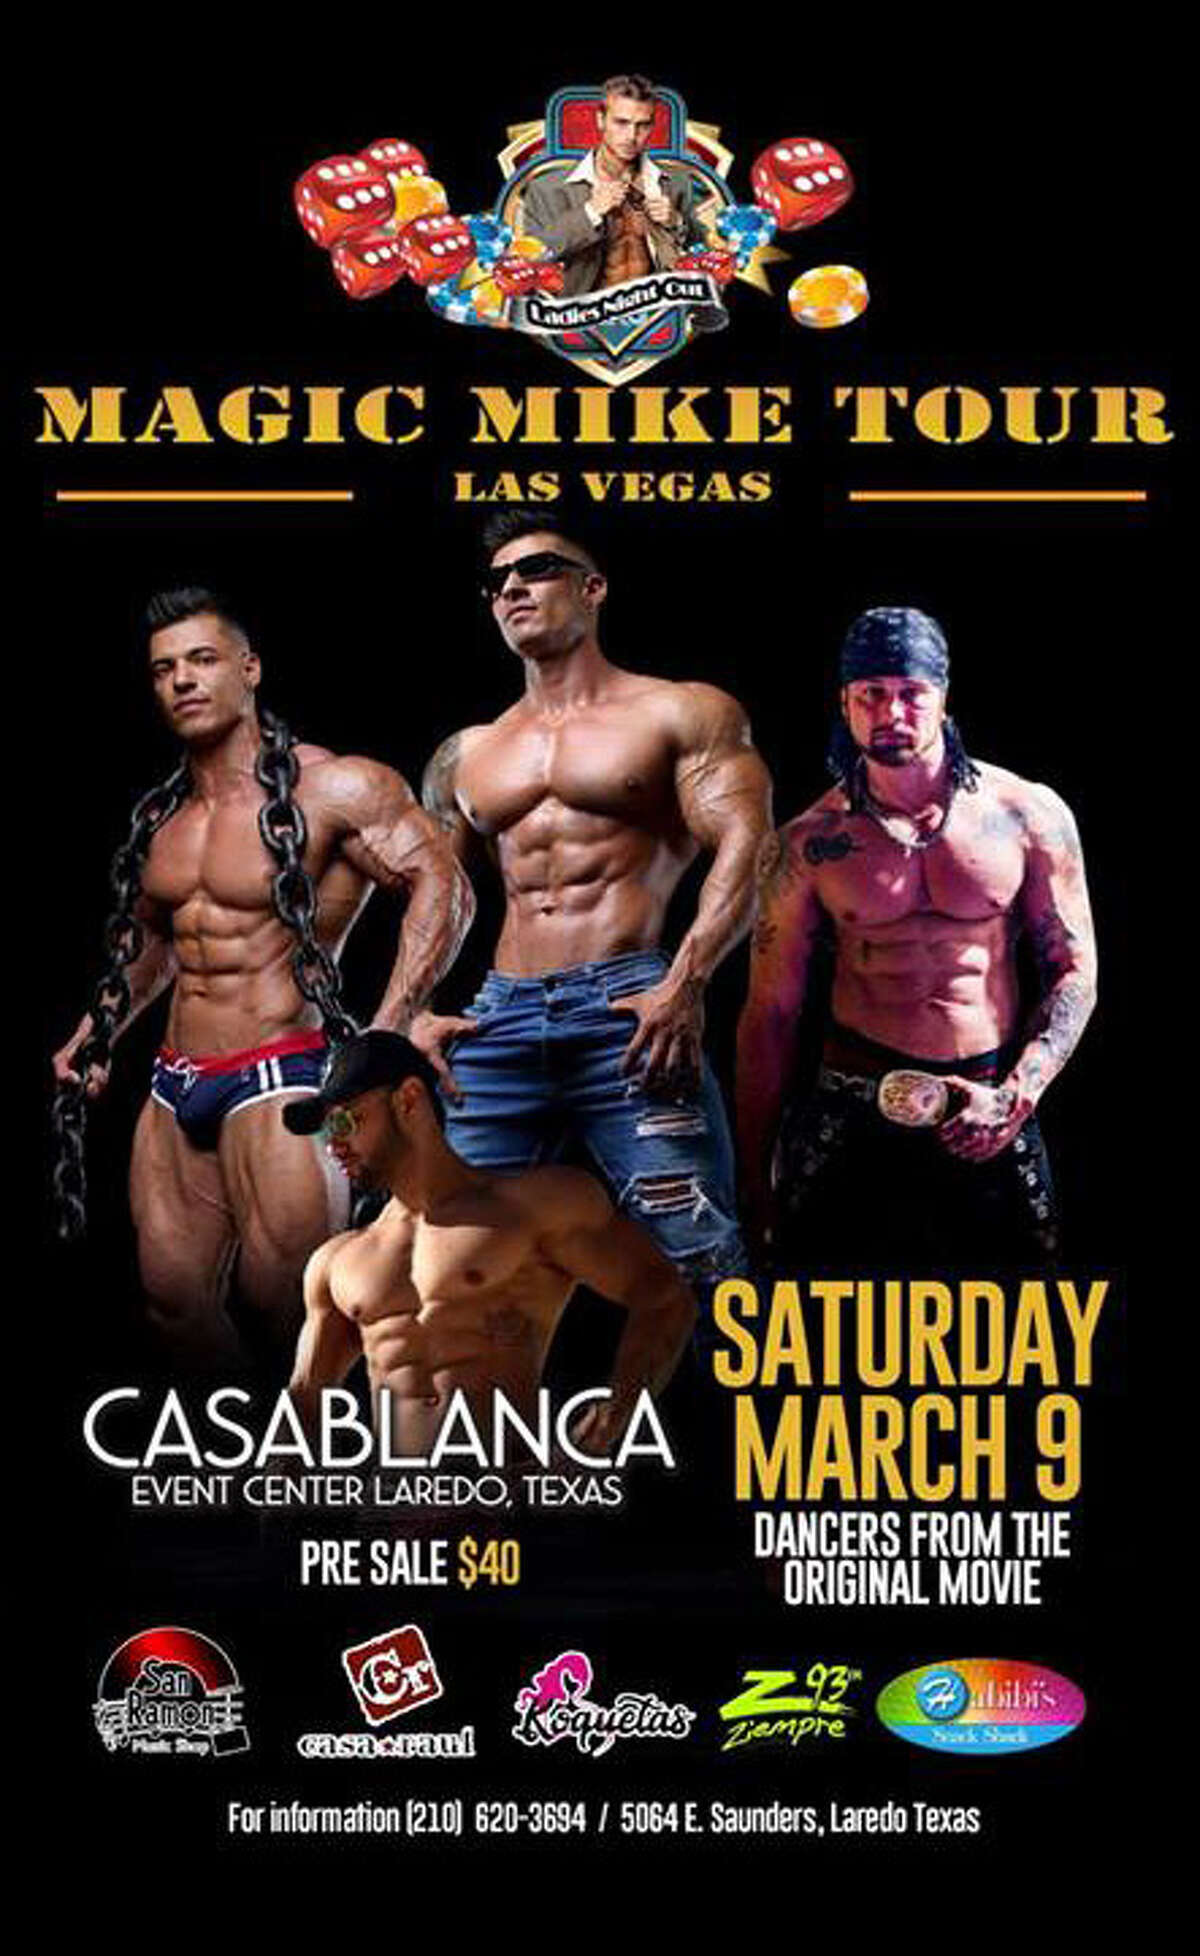 Magic Mike TourWhen: March 9 at 8 p.m.Where: Casablanca Event Center